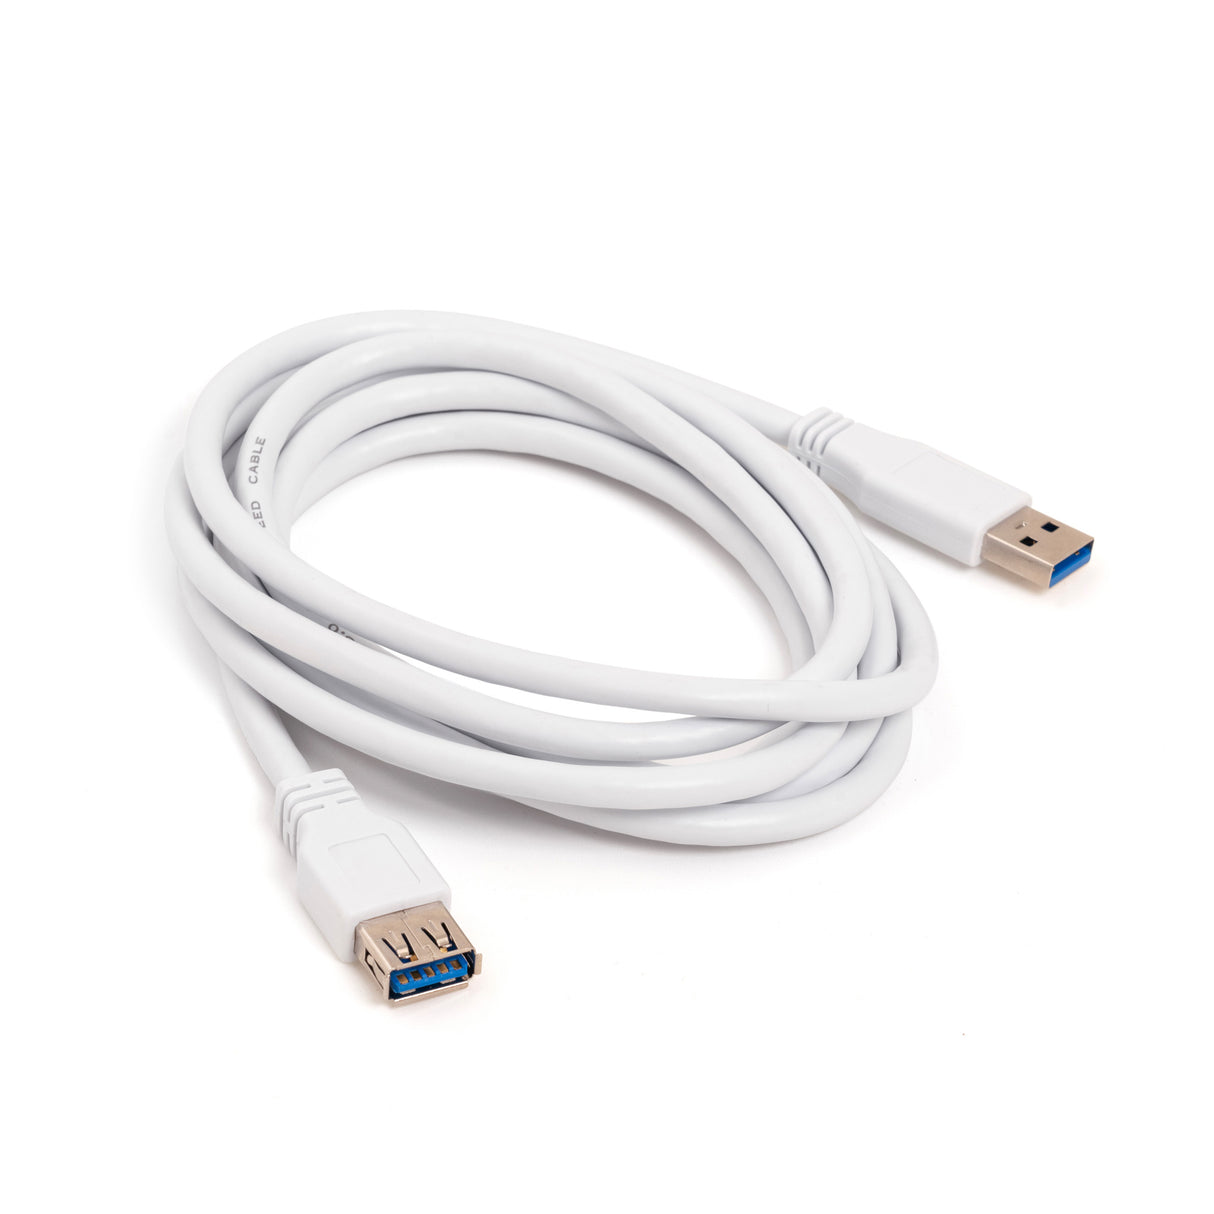 Cable USB 3.0 macho-hembra de 2 metros AV0482C